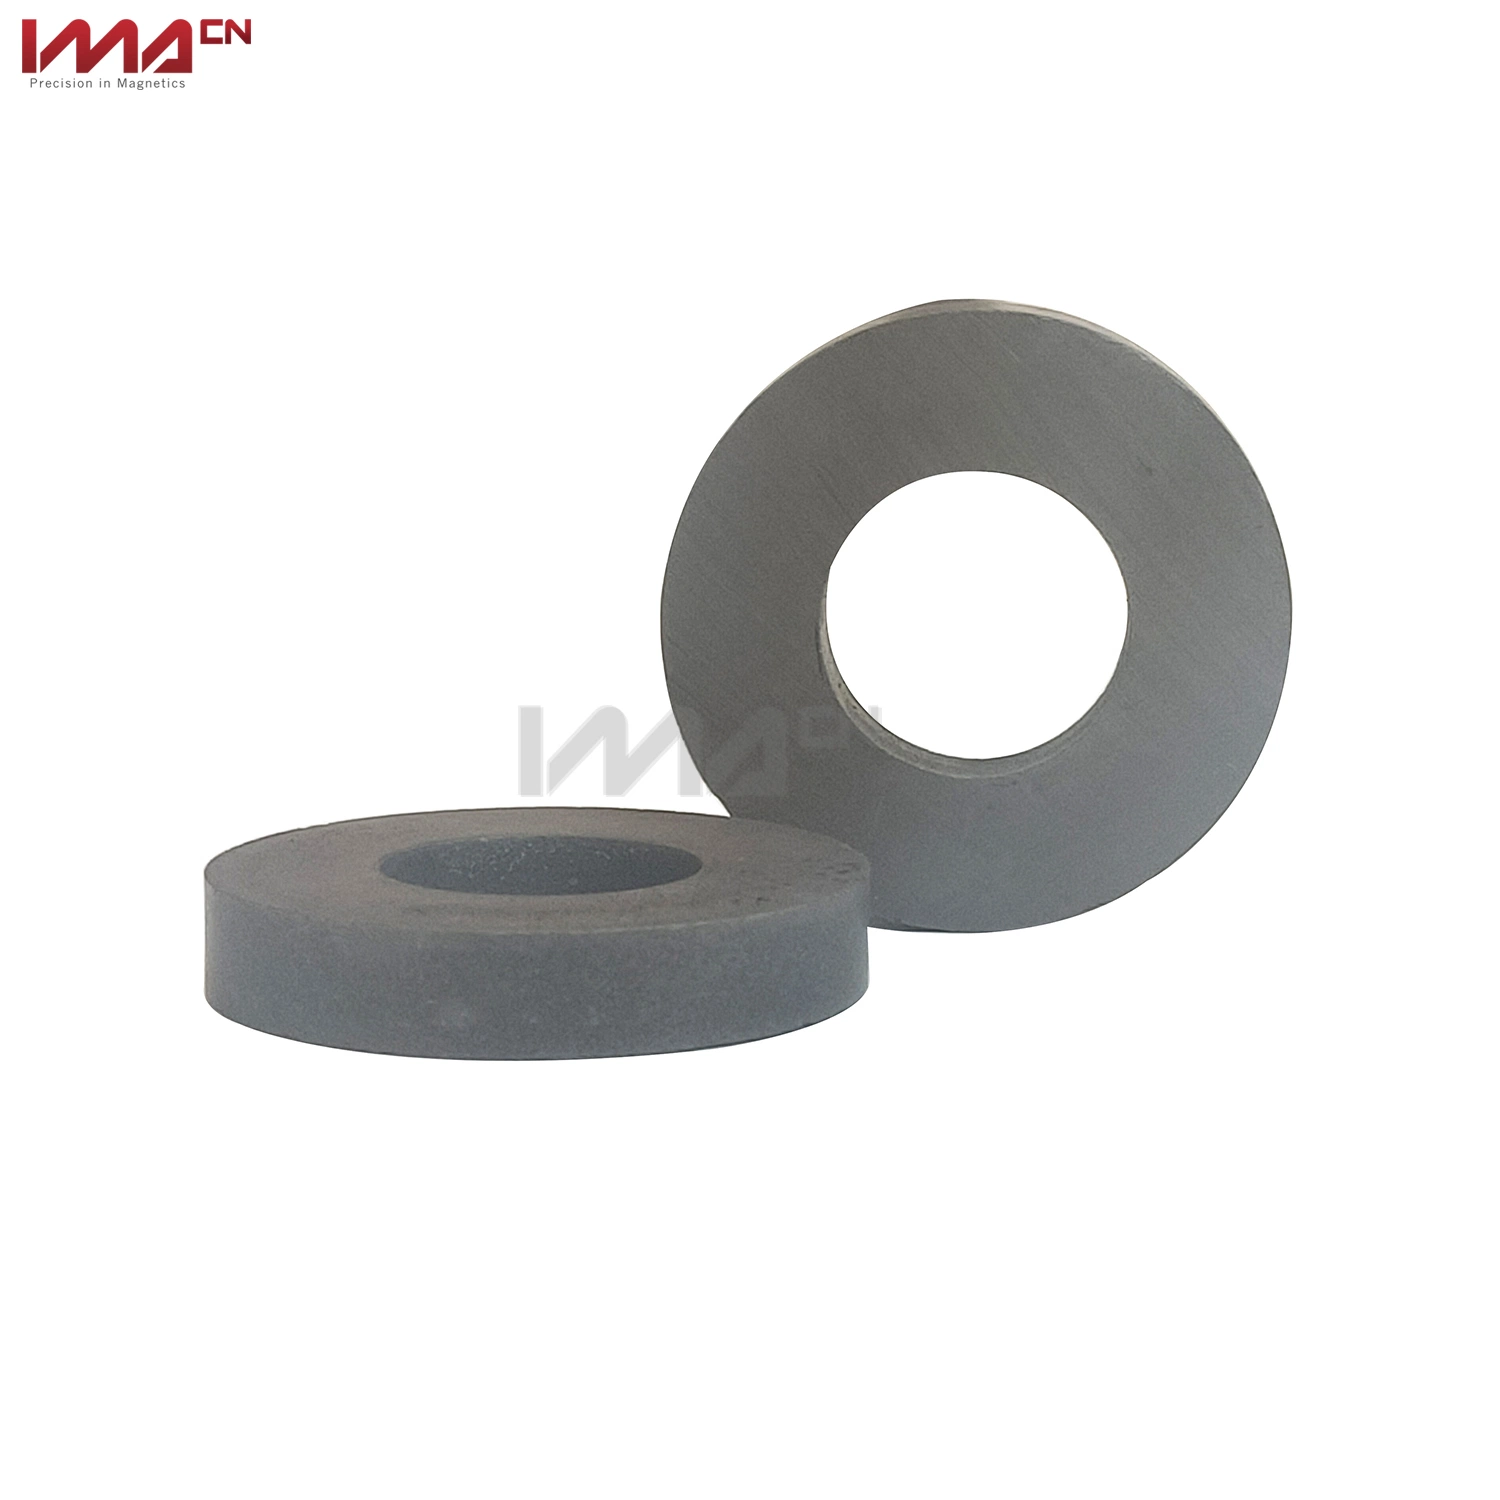 Heavy Duty Permanent Rare Earth Ceramic Ring Ferrite Magnets for Motor